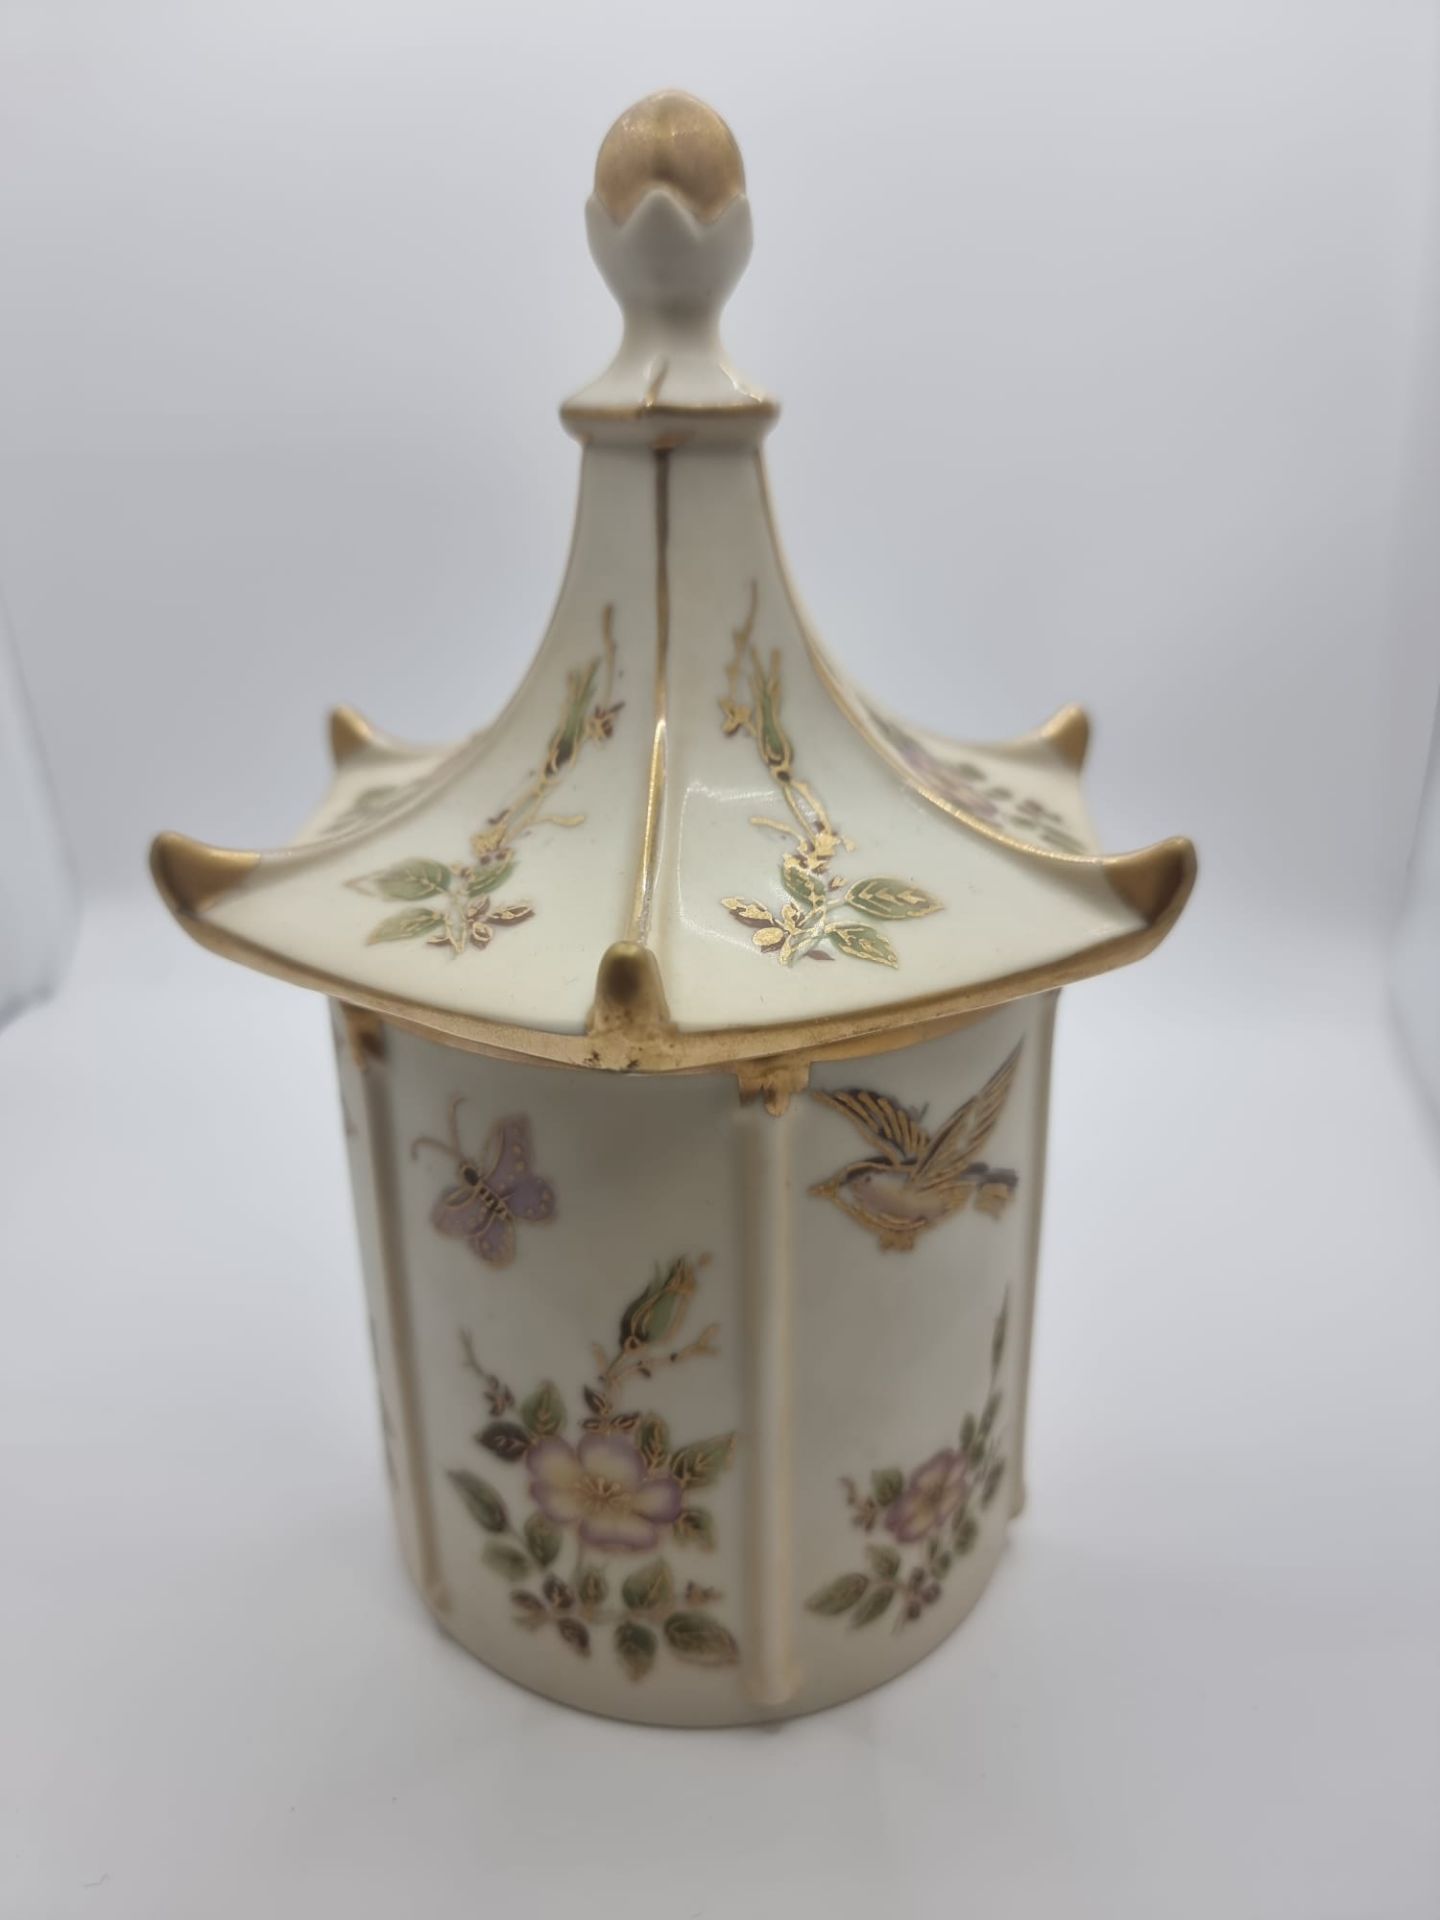 Lenwile China Ardalt beautiful hand painted porcelain Pagoda tea or apothecary jar - Image 2 of 6